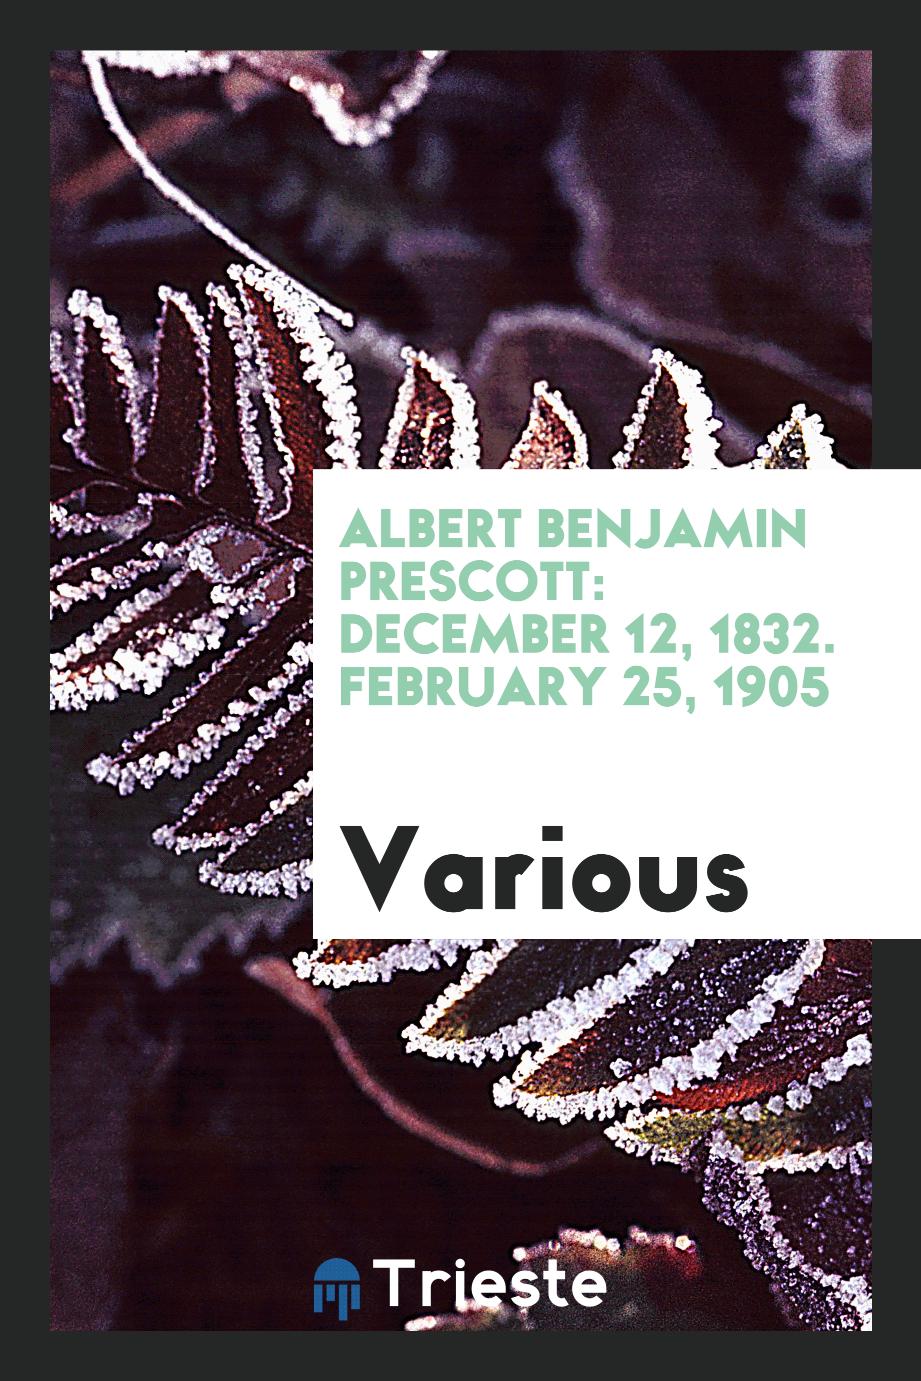 Albert Benjamin Prescott: December 12, 1832. February 25, 1905